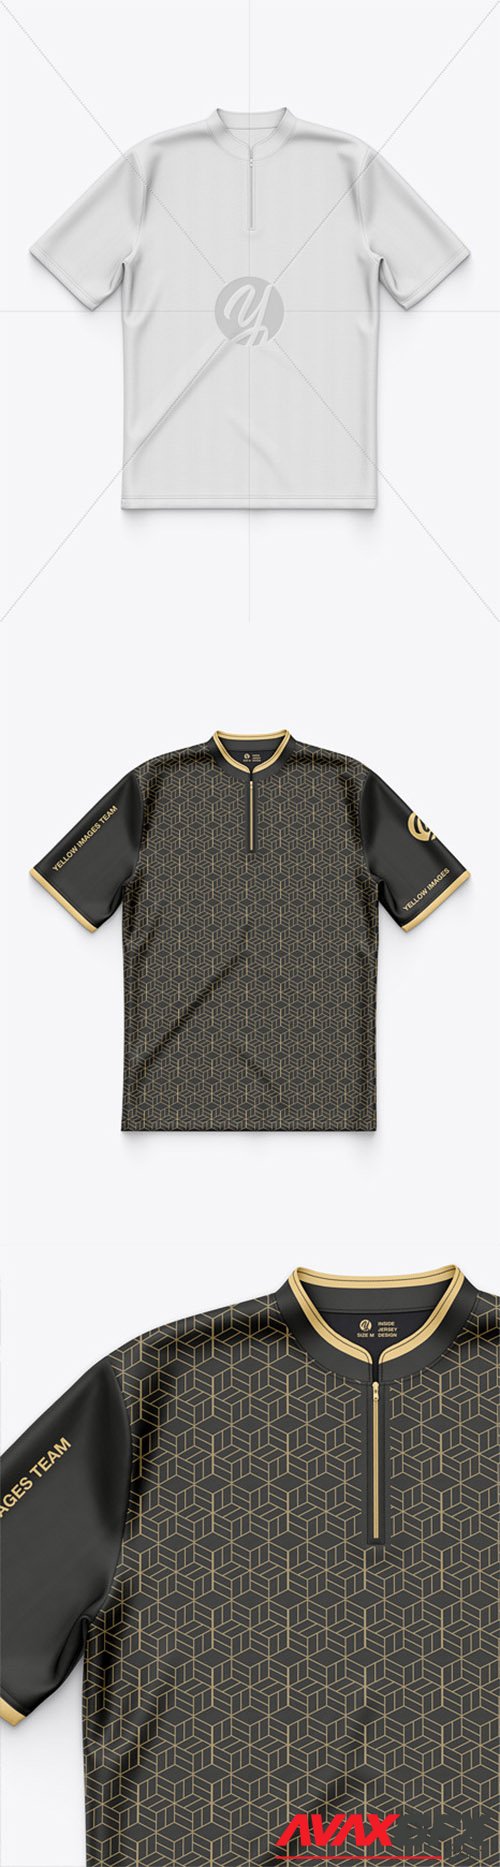 Stand Zip Collar Polo Shirt / Dart Shirt- Top View - Sublimated Polo Shirt 67772